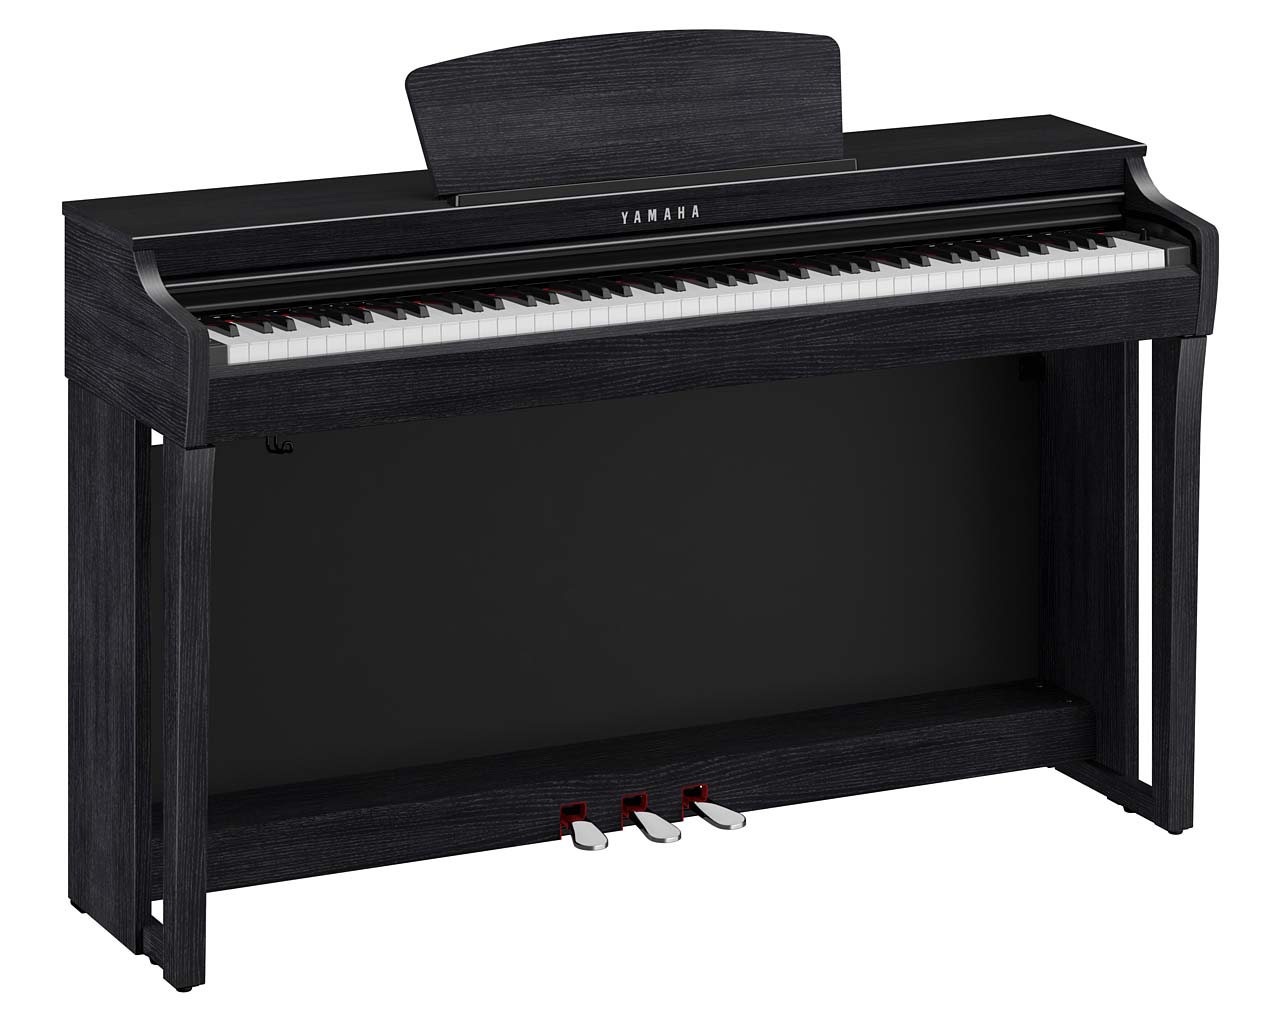 Yamaha-Clavinova-CLP-725-B-Digitalpiano-schwarz-Pianohaus-Filipski